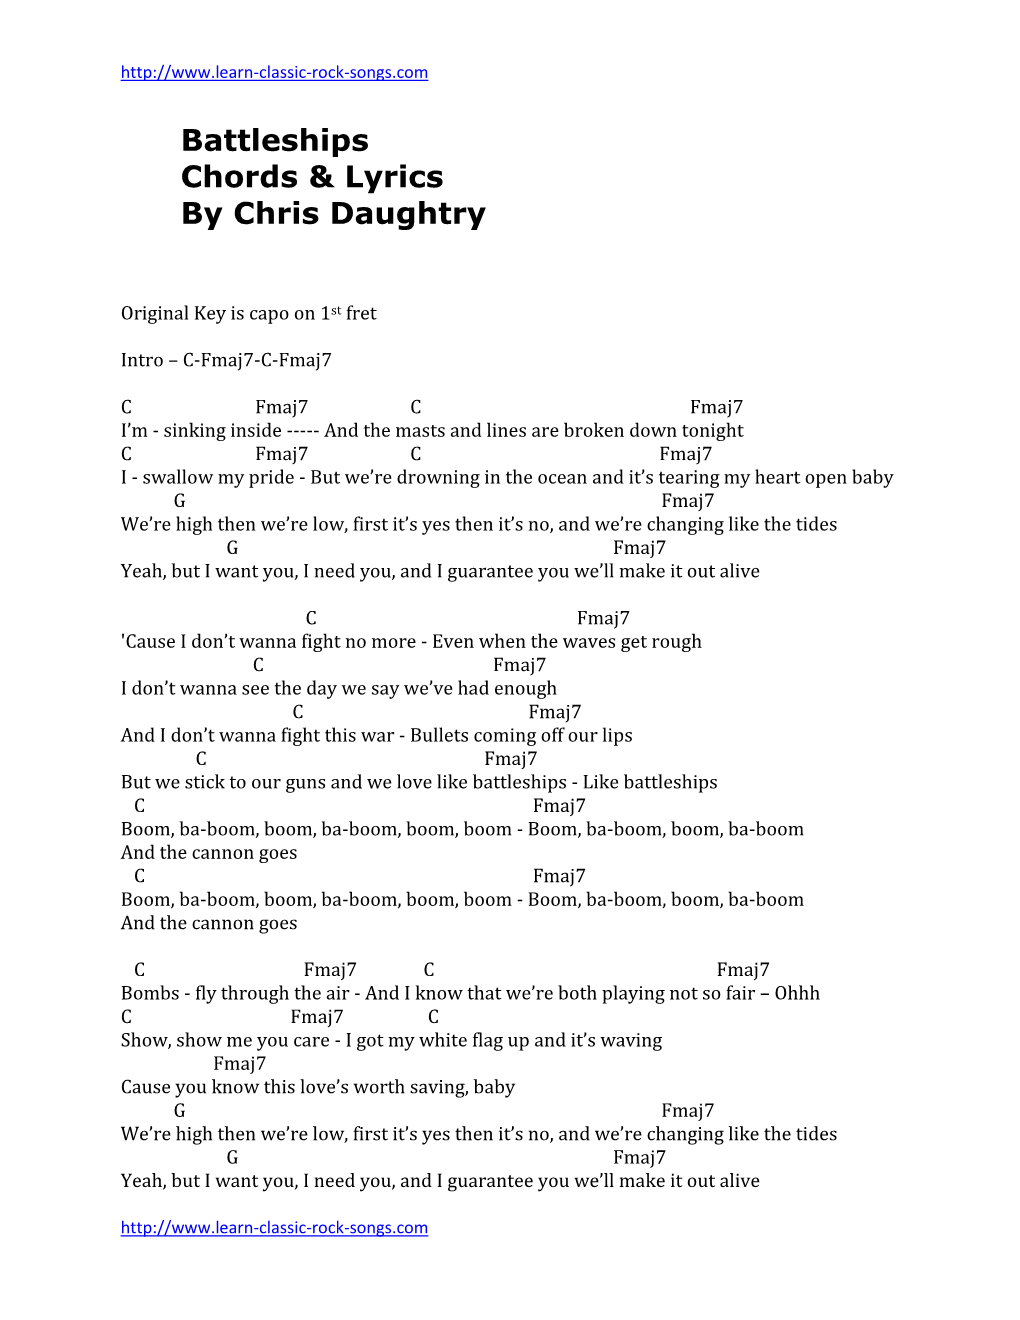 Battleships Chords & Lyrics by Chris Daughtry